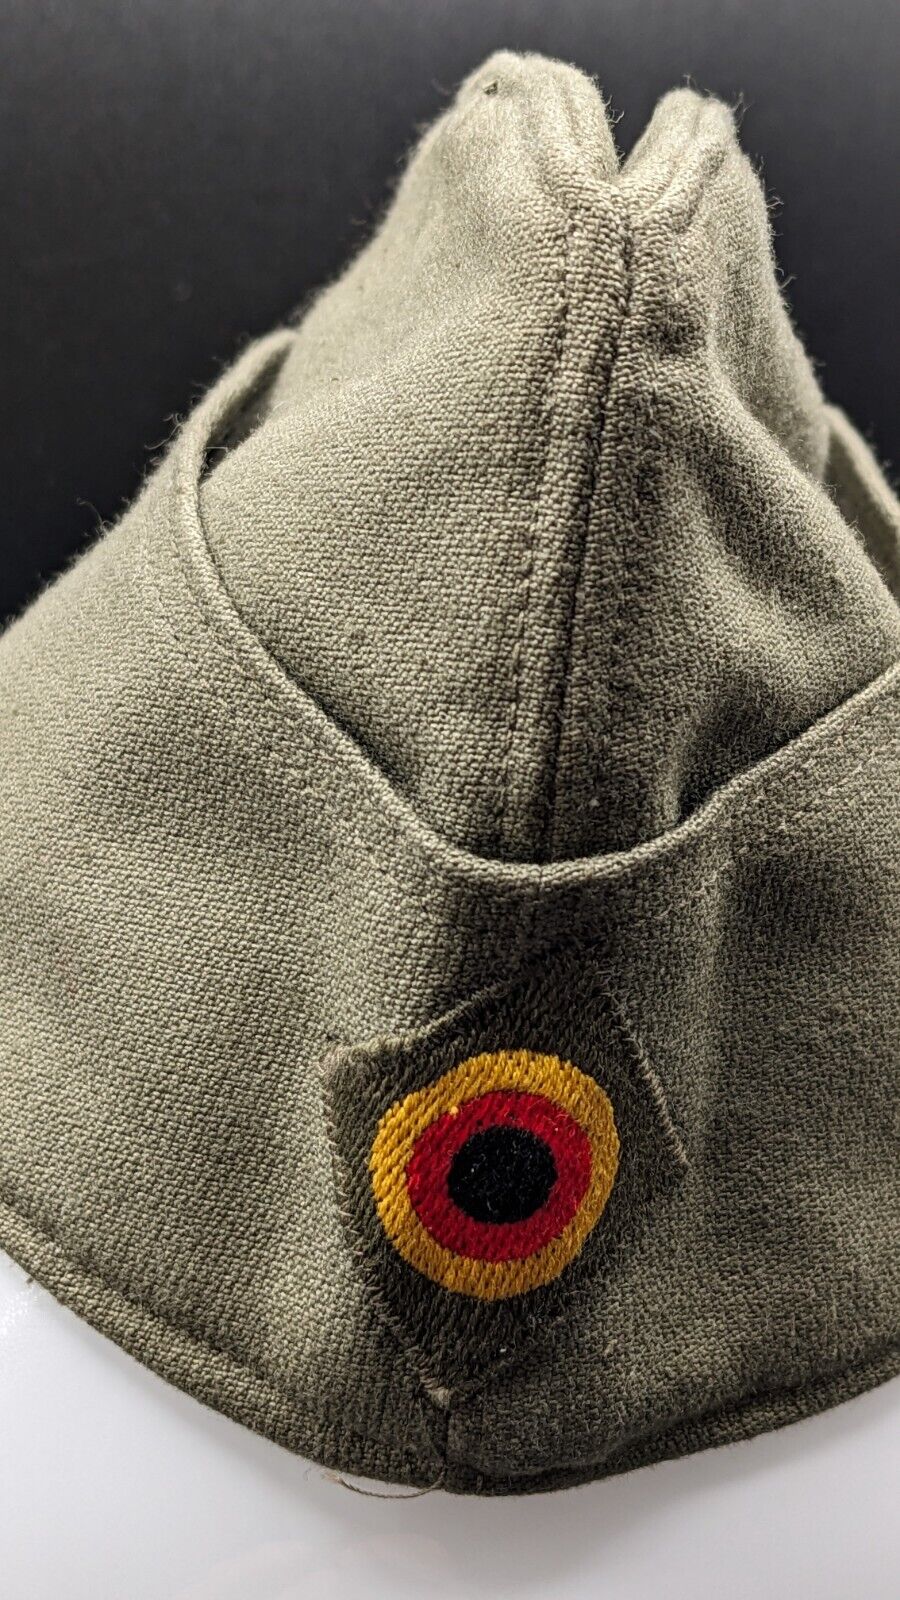 Original 1963 Cold War West German Army  Cotton  Hat with Cockade